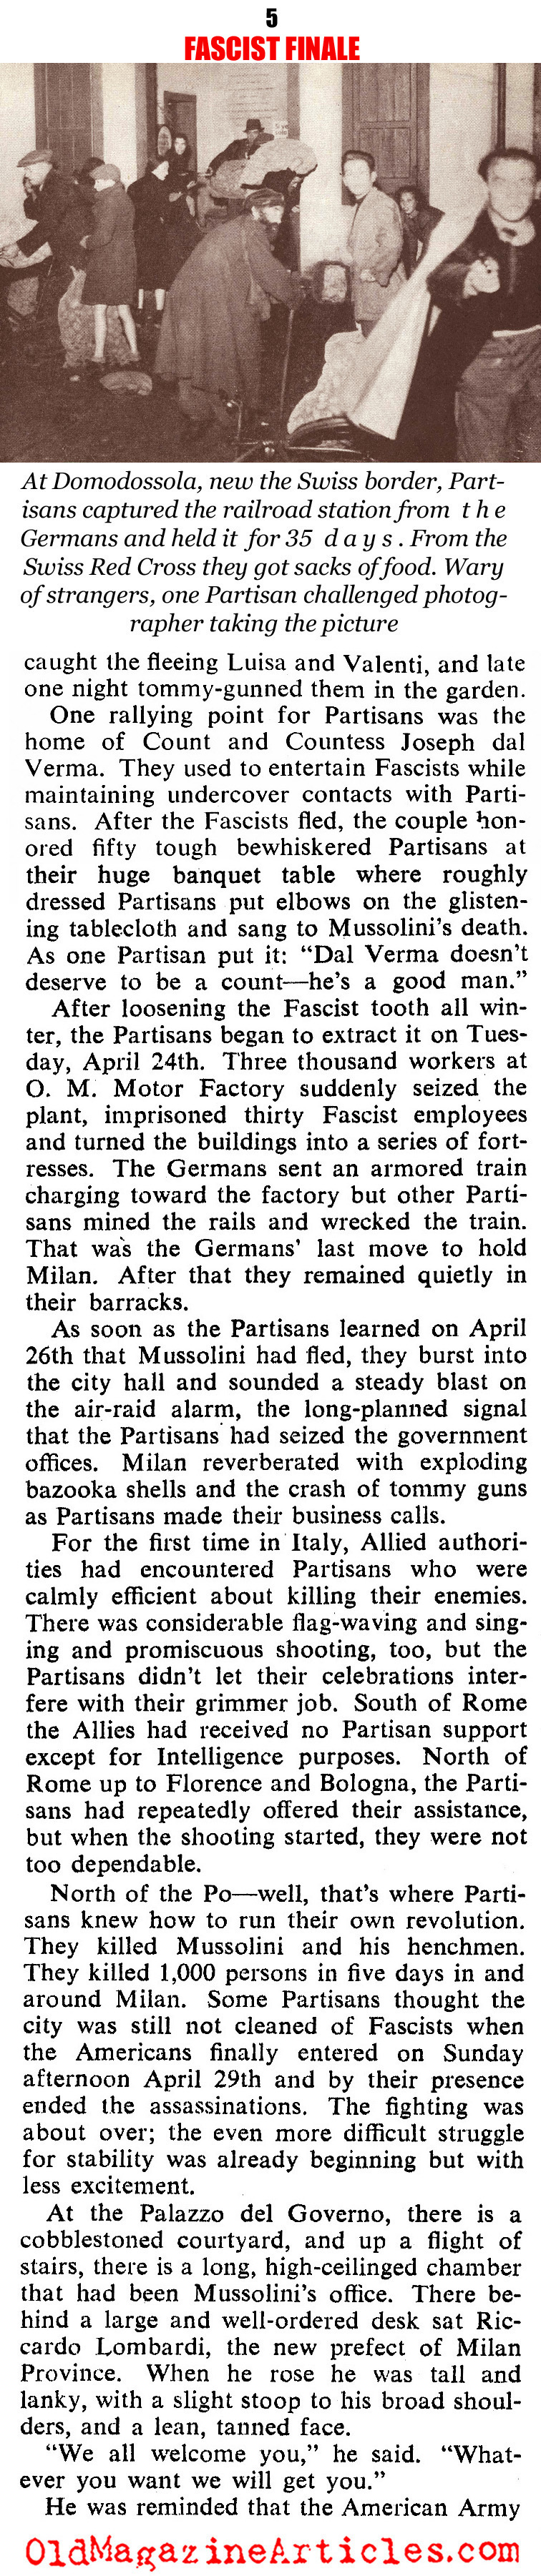 ''Fascist Finale'' (Collier's Magazine, 1945)